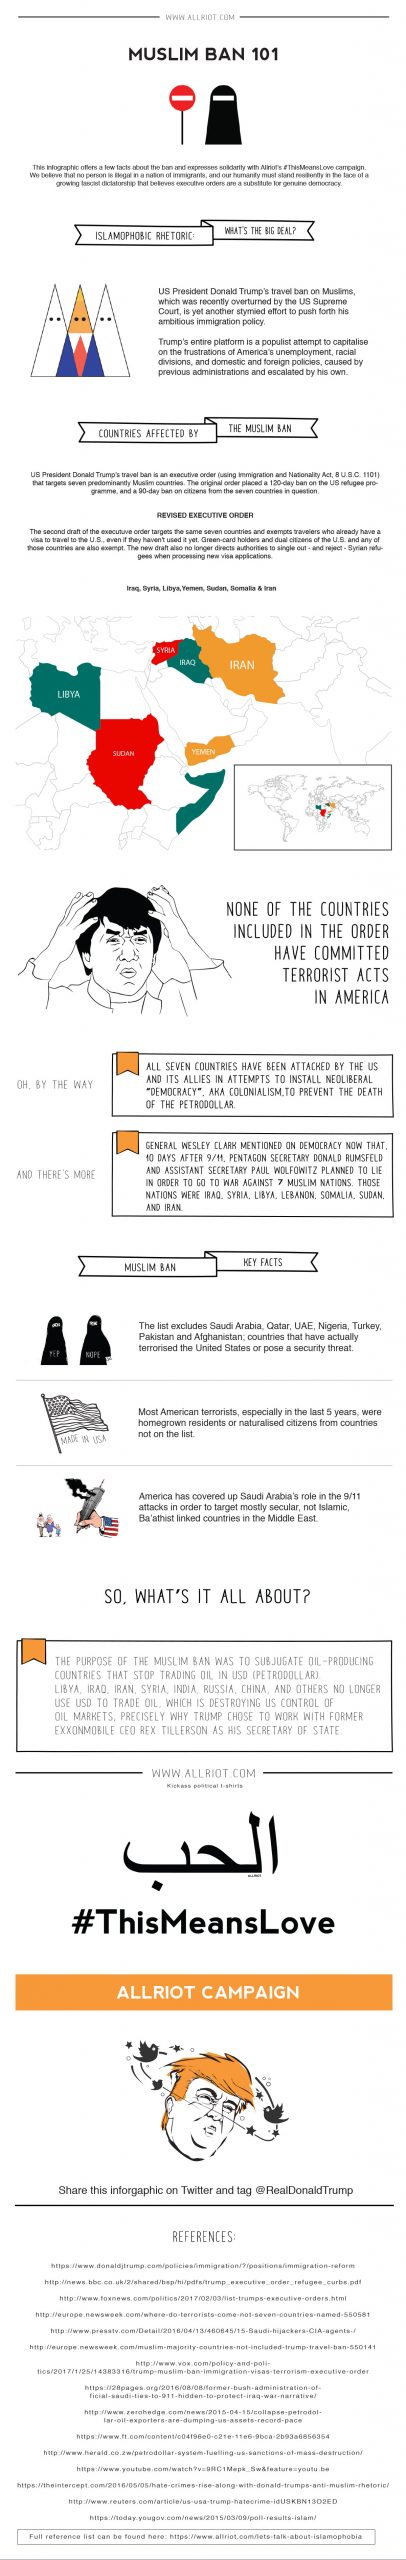 muslim-ban-infographic-allriot